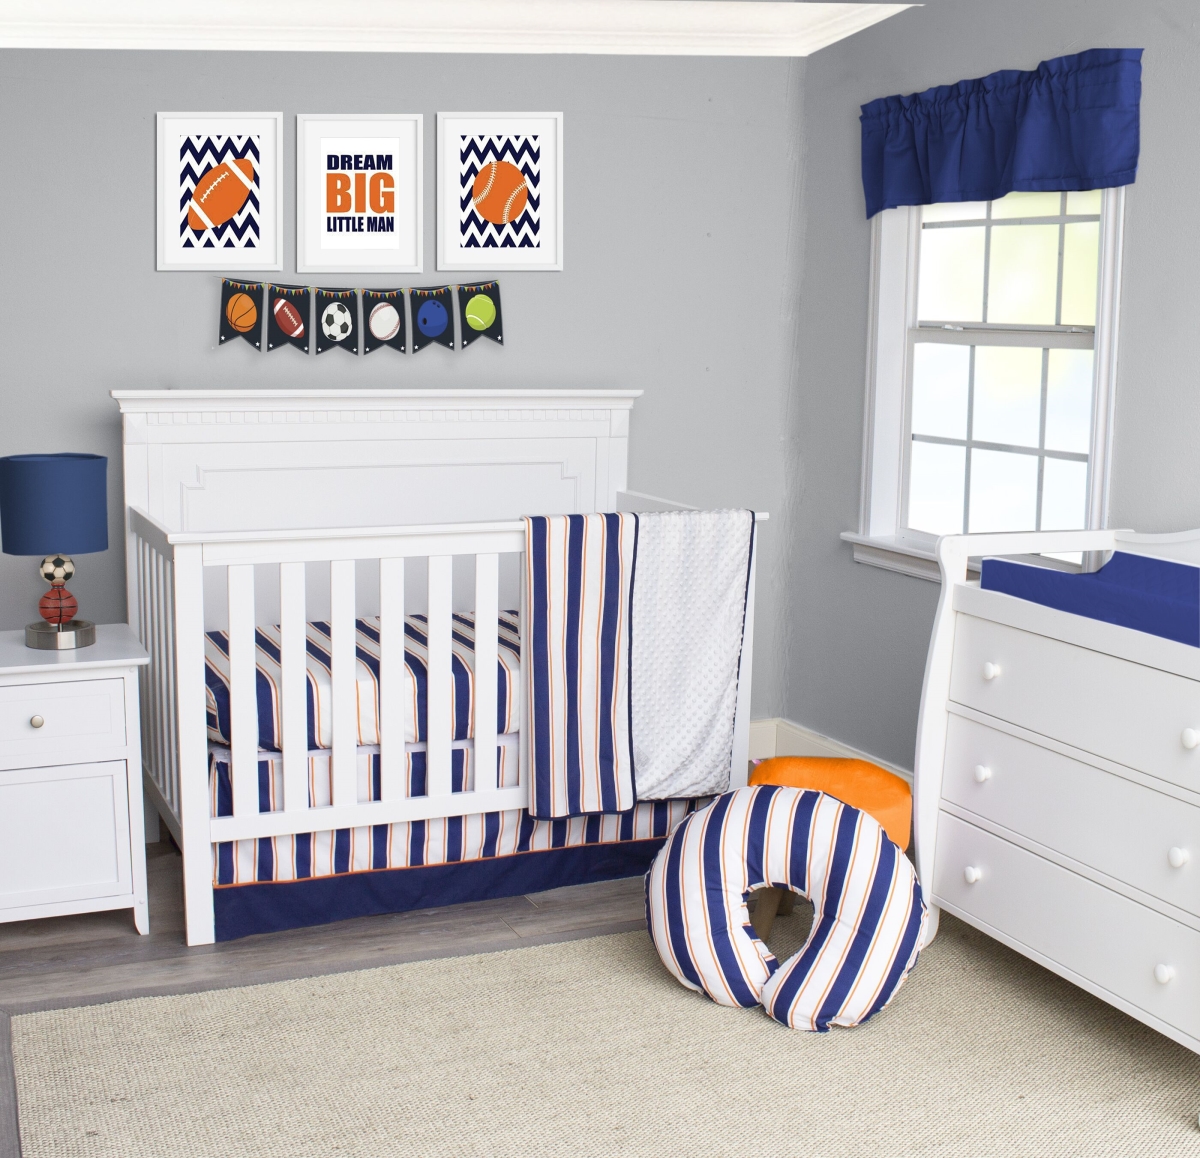 Bdnb-3-sports All Star Sports Crib Bedding Set Navy Blue Orange & White - 3 Piece